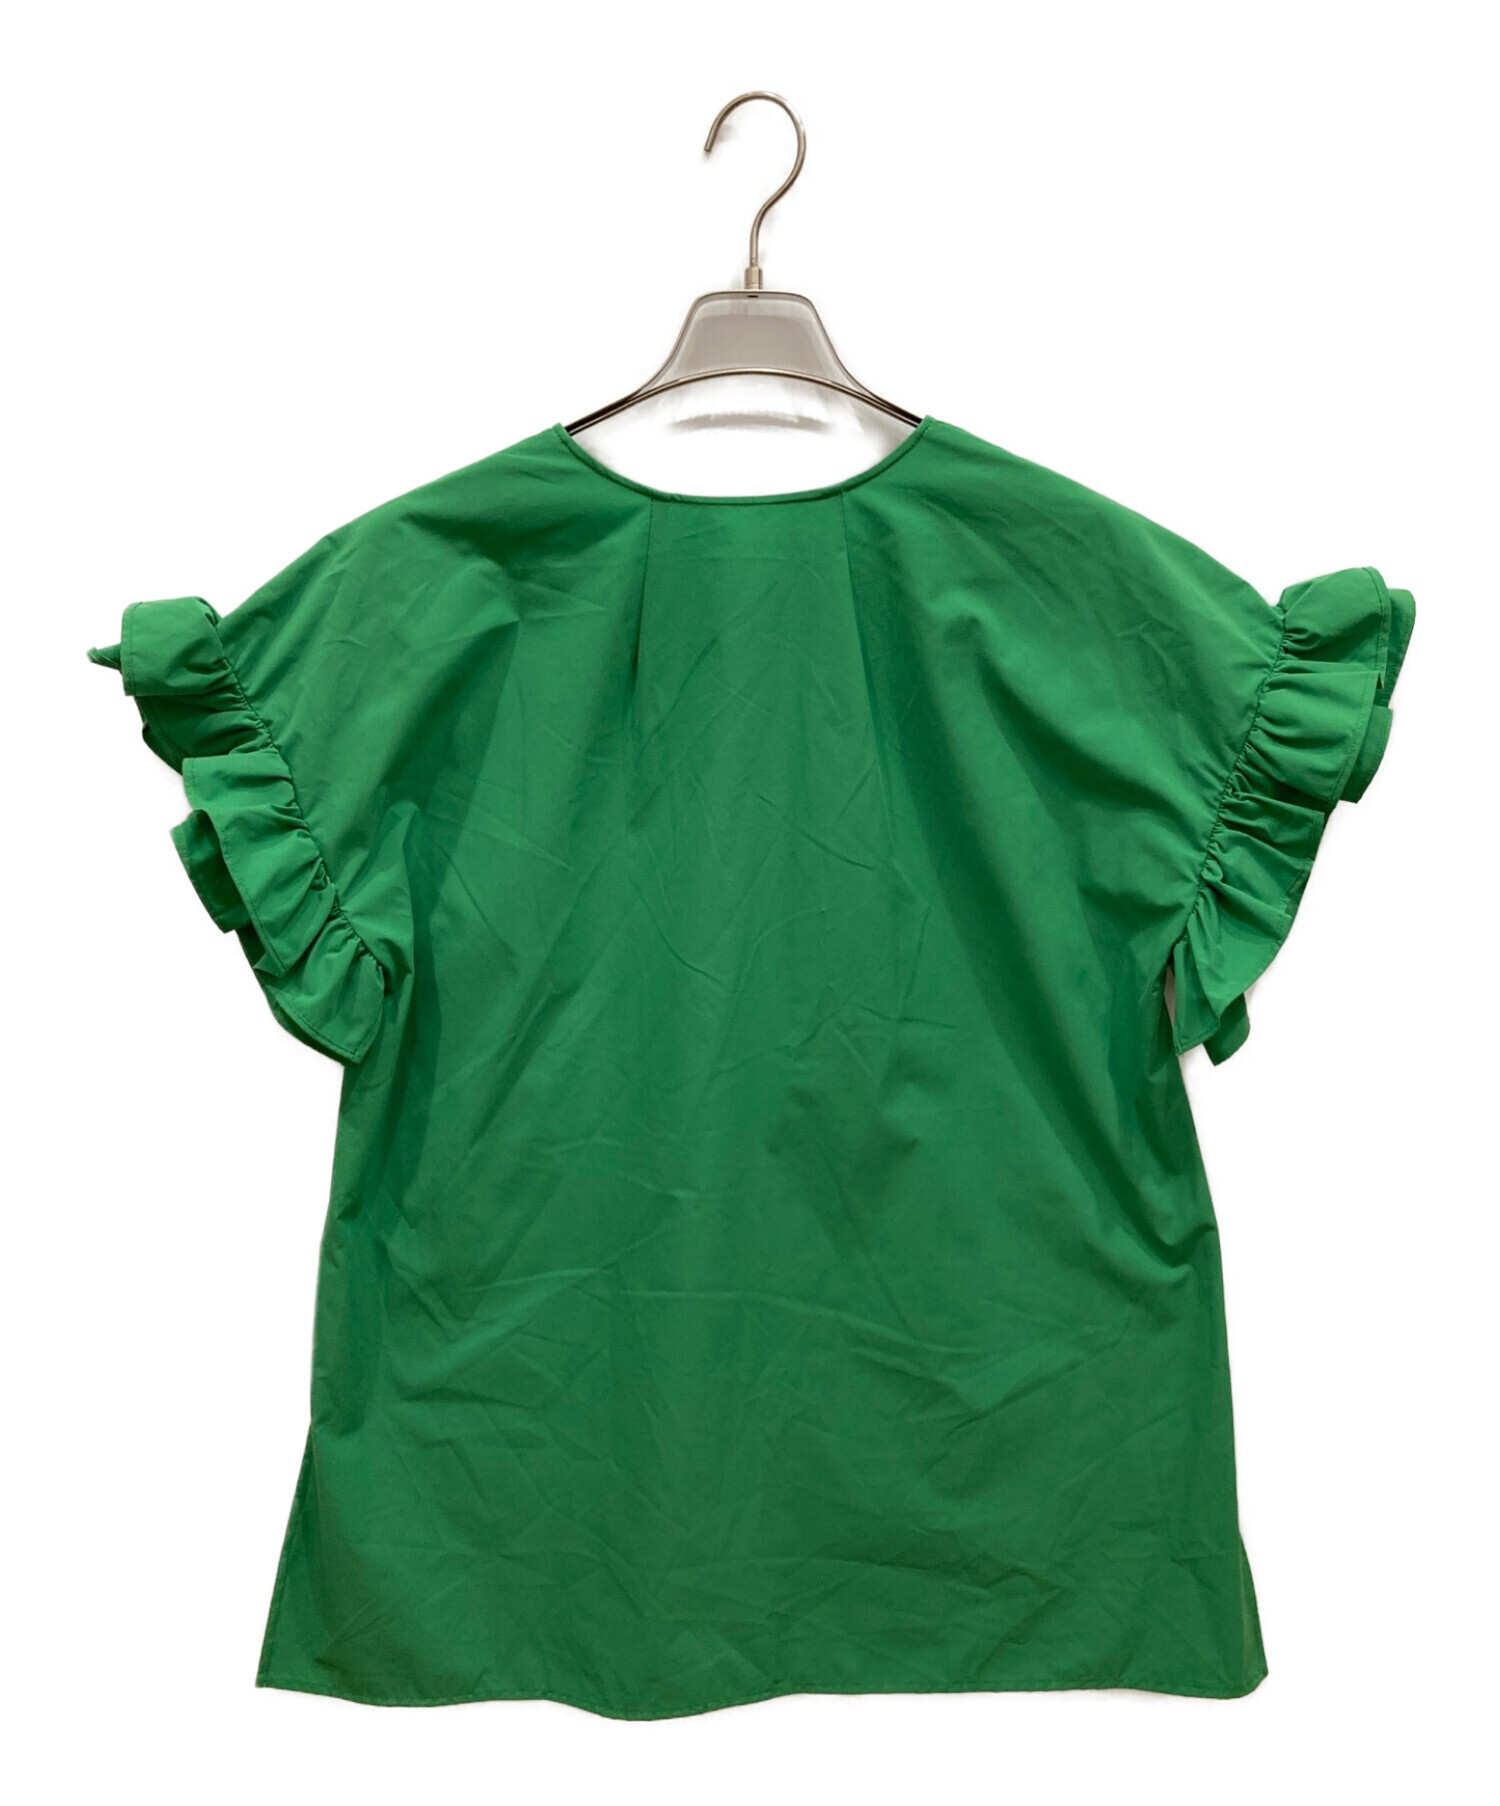 CADUNE (カデュネ) 袖フリルブラウス 川上桃子コラボ グリーン サイズ:38 未使用品